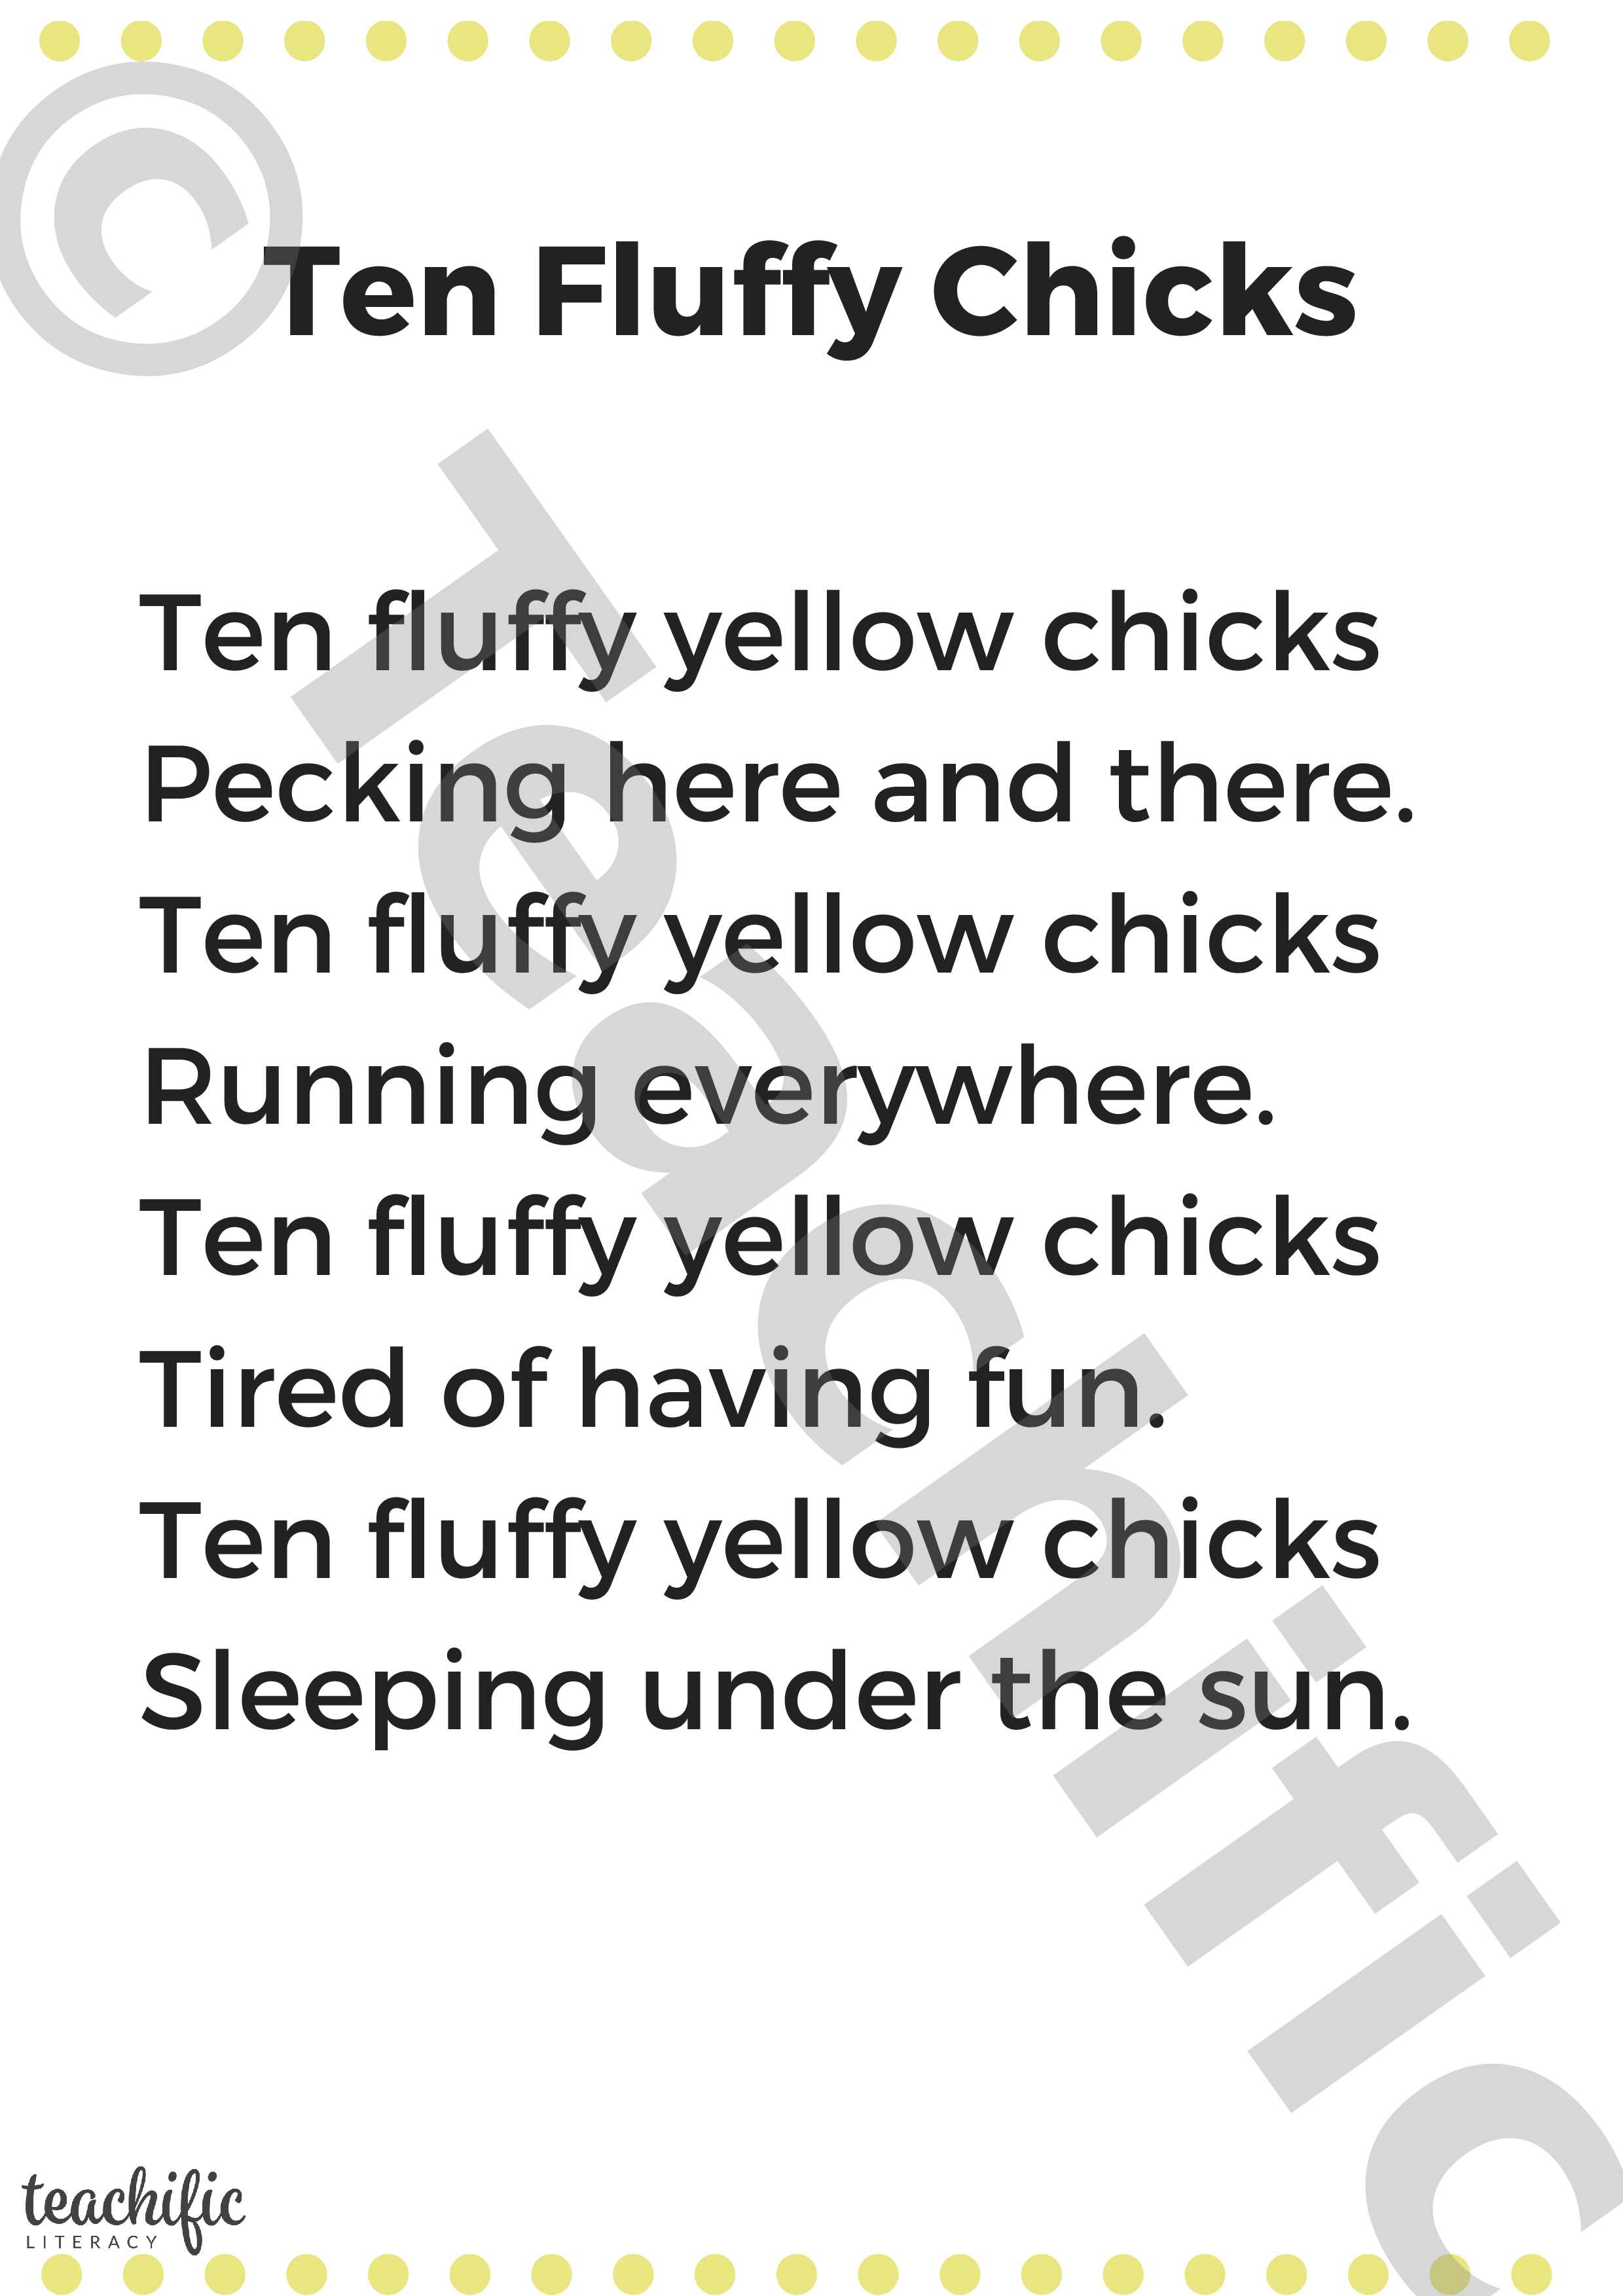 poem-ten-fluffy-chicks-teachific